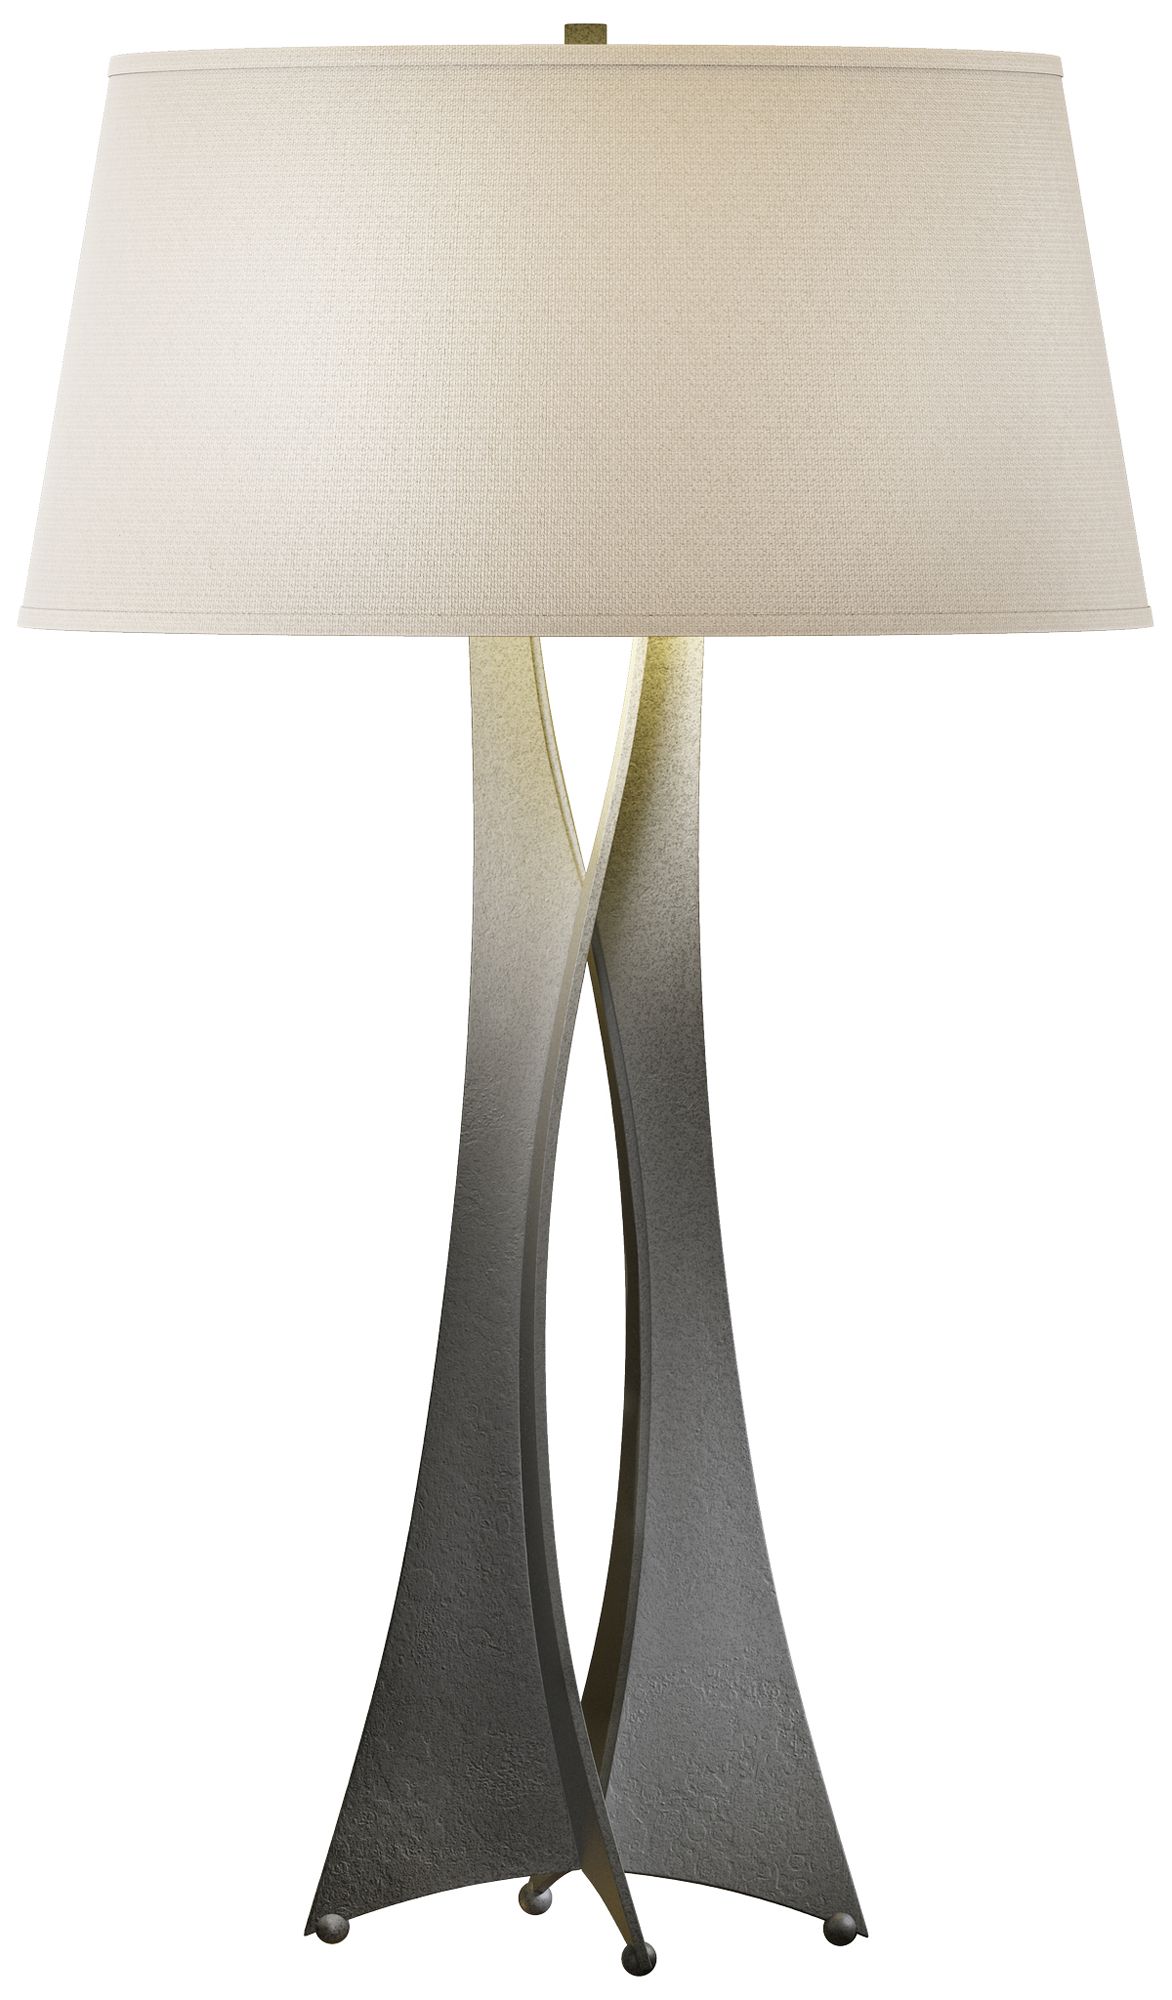 Moreau 33.4"H Tall Natural Iron Table Lamp With Natural Linen Shade